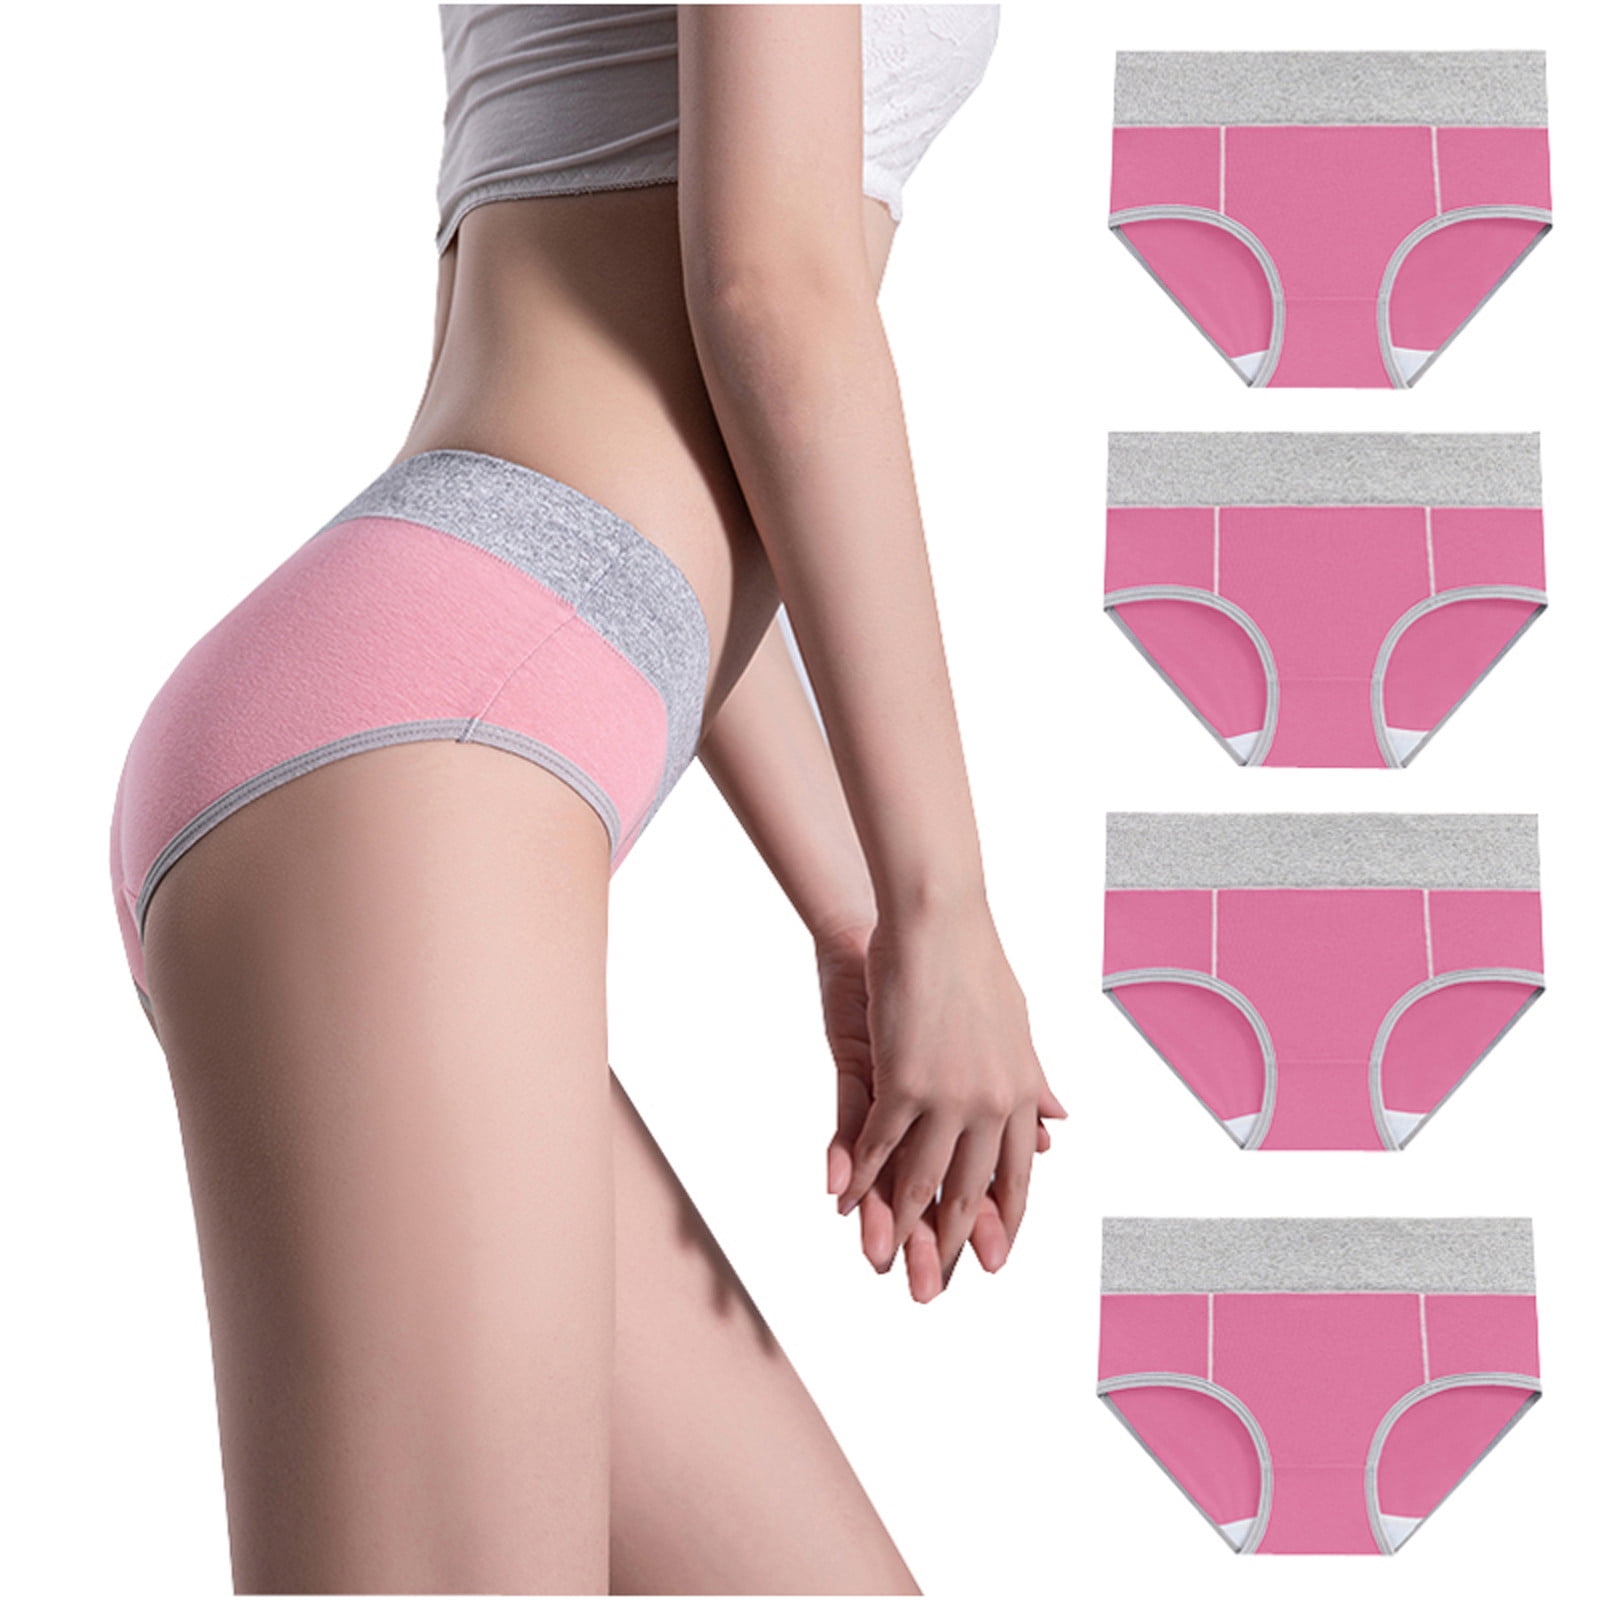 wirarpa Women's Boyshorts Panties Cotton Boxer Briefs for Ladies Underwear  Shorts with Cotton Crotch 4 Pack(Black/Heather Gray/White/Nude) - wirarpa